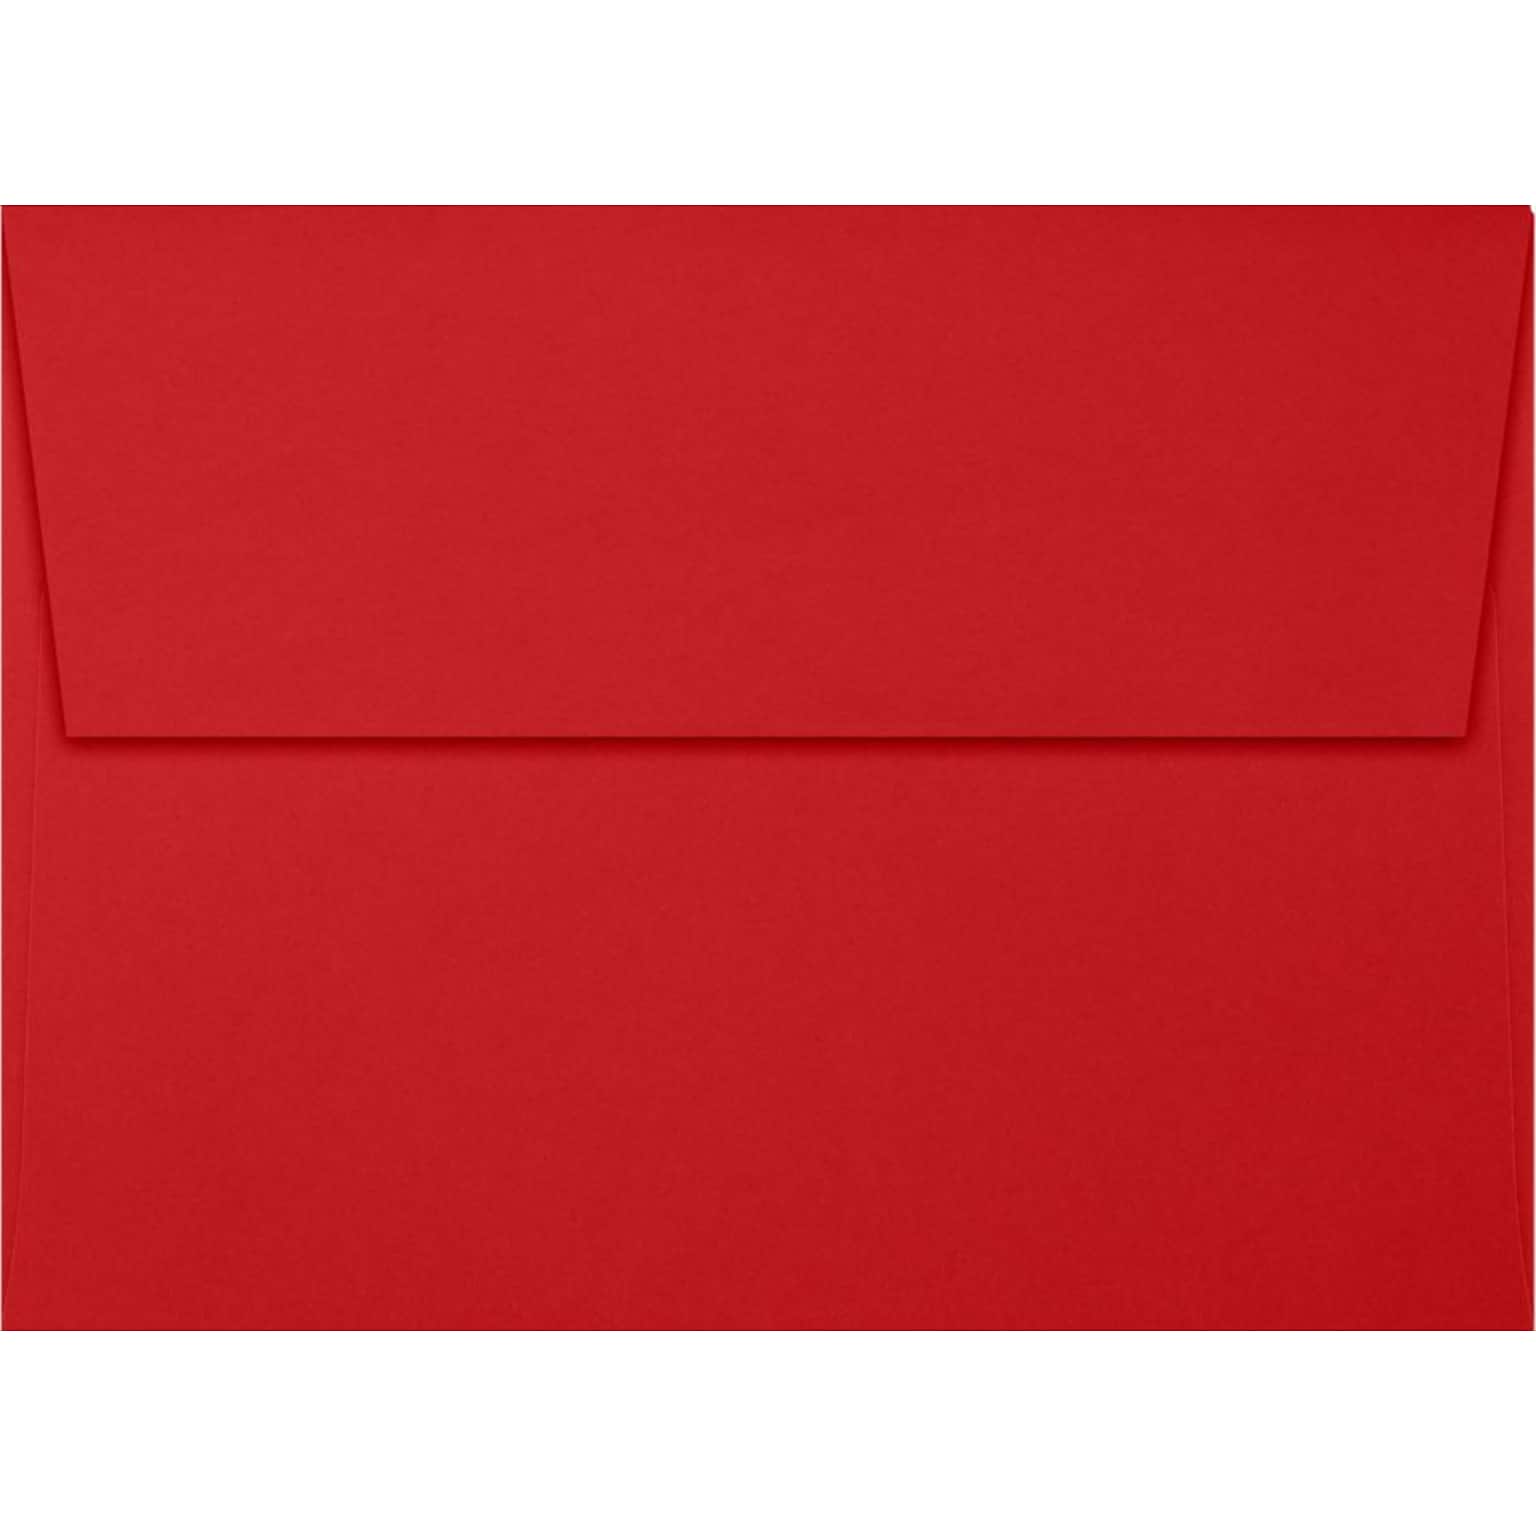 LUX A7 Invitation Envelopes (5 1/4 x 7 1/4) 1000/Box, Ruby Red (EX4880-18-1000)